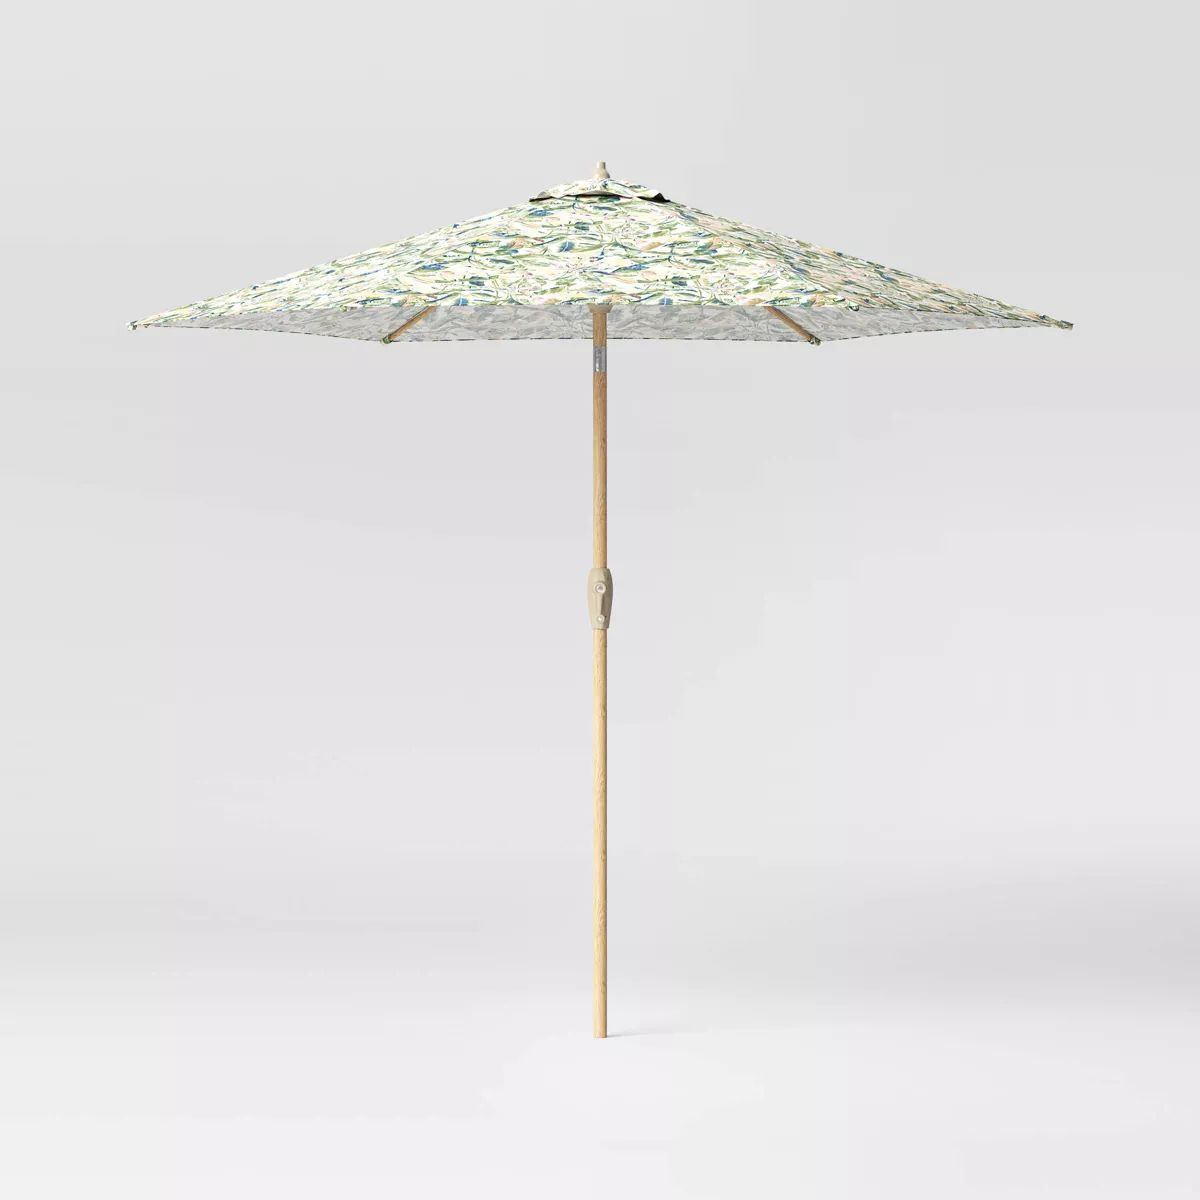 9' Round Outdoor Patio Market Umbrella with Light Wood Pole - Threshold™ | Target